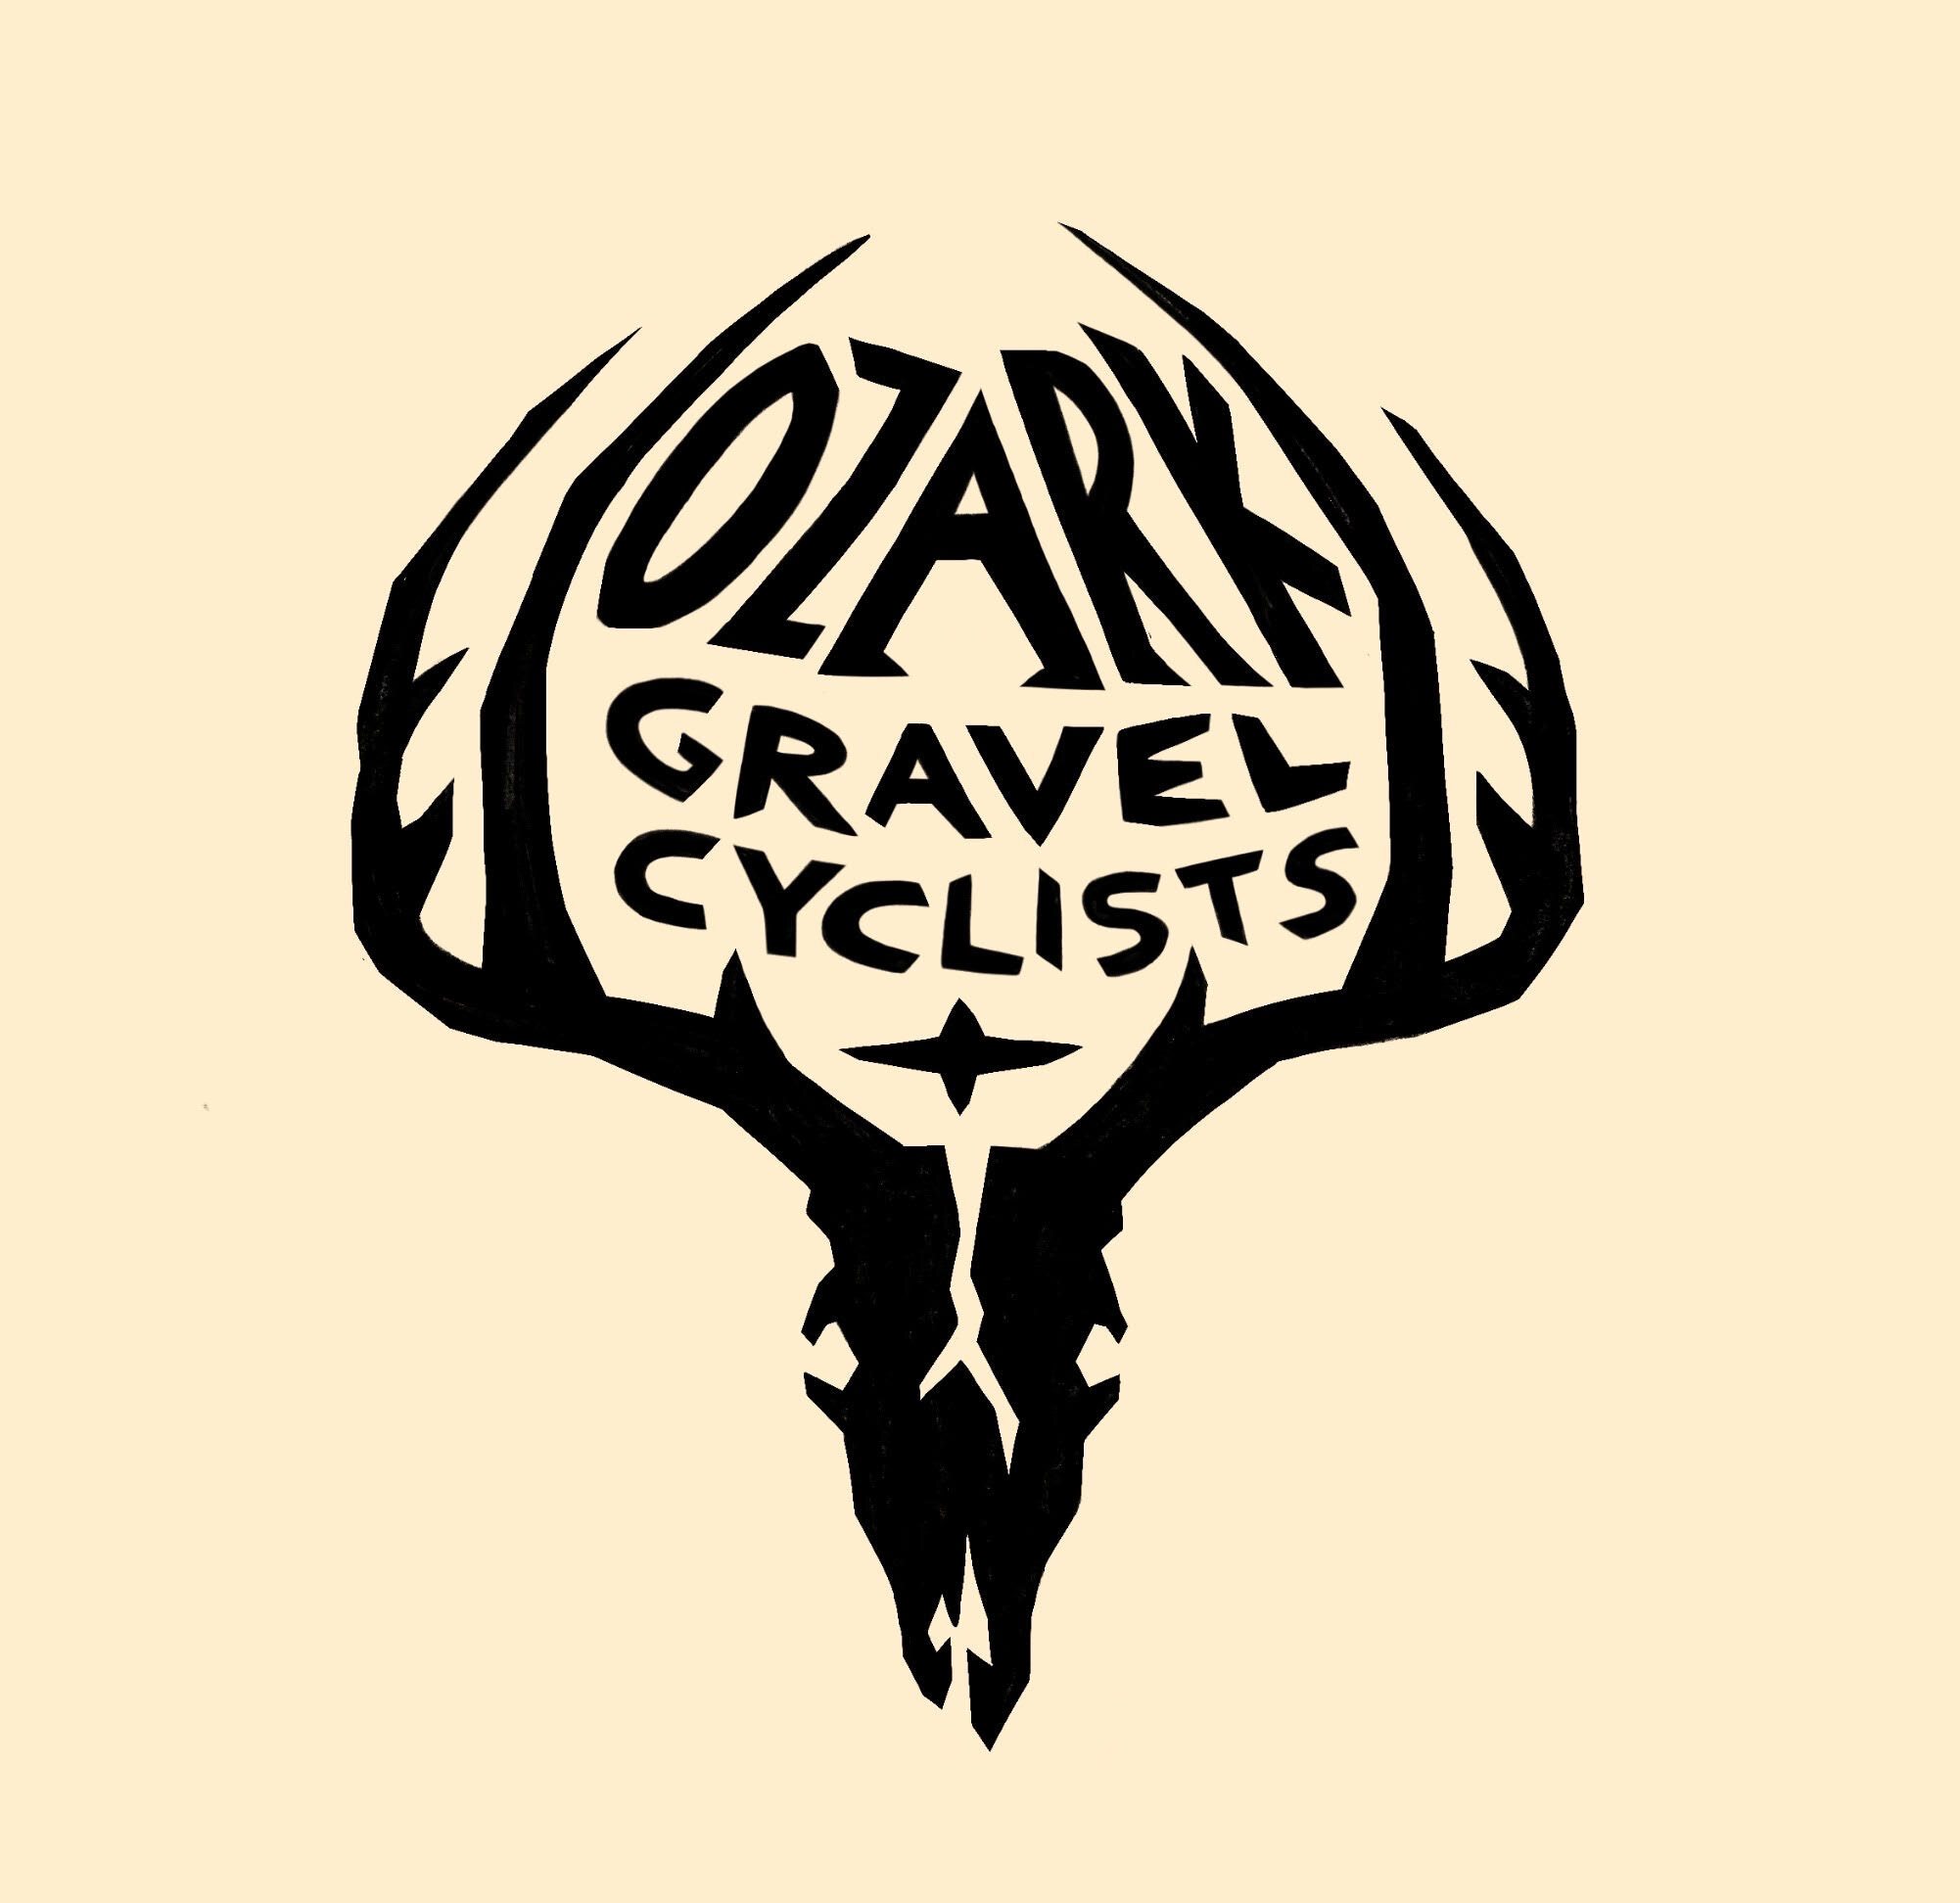 Ozark Gravel Cyclists